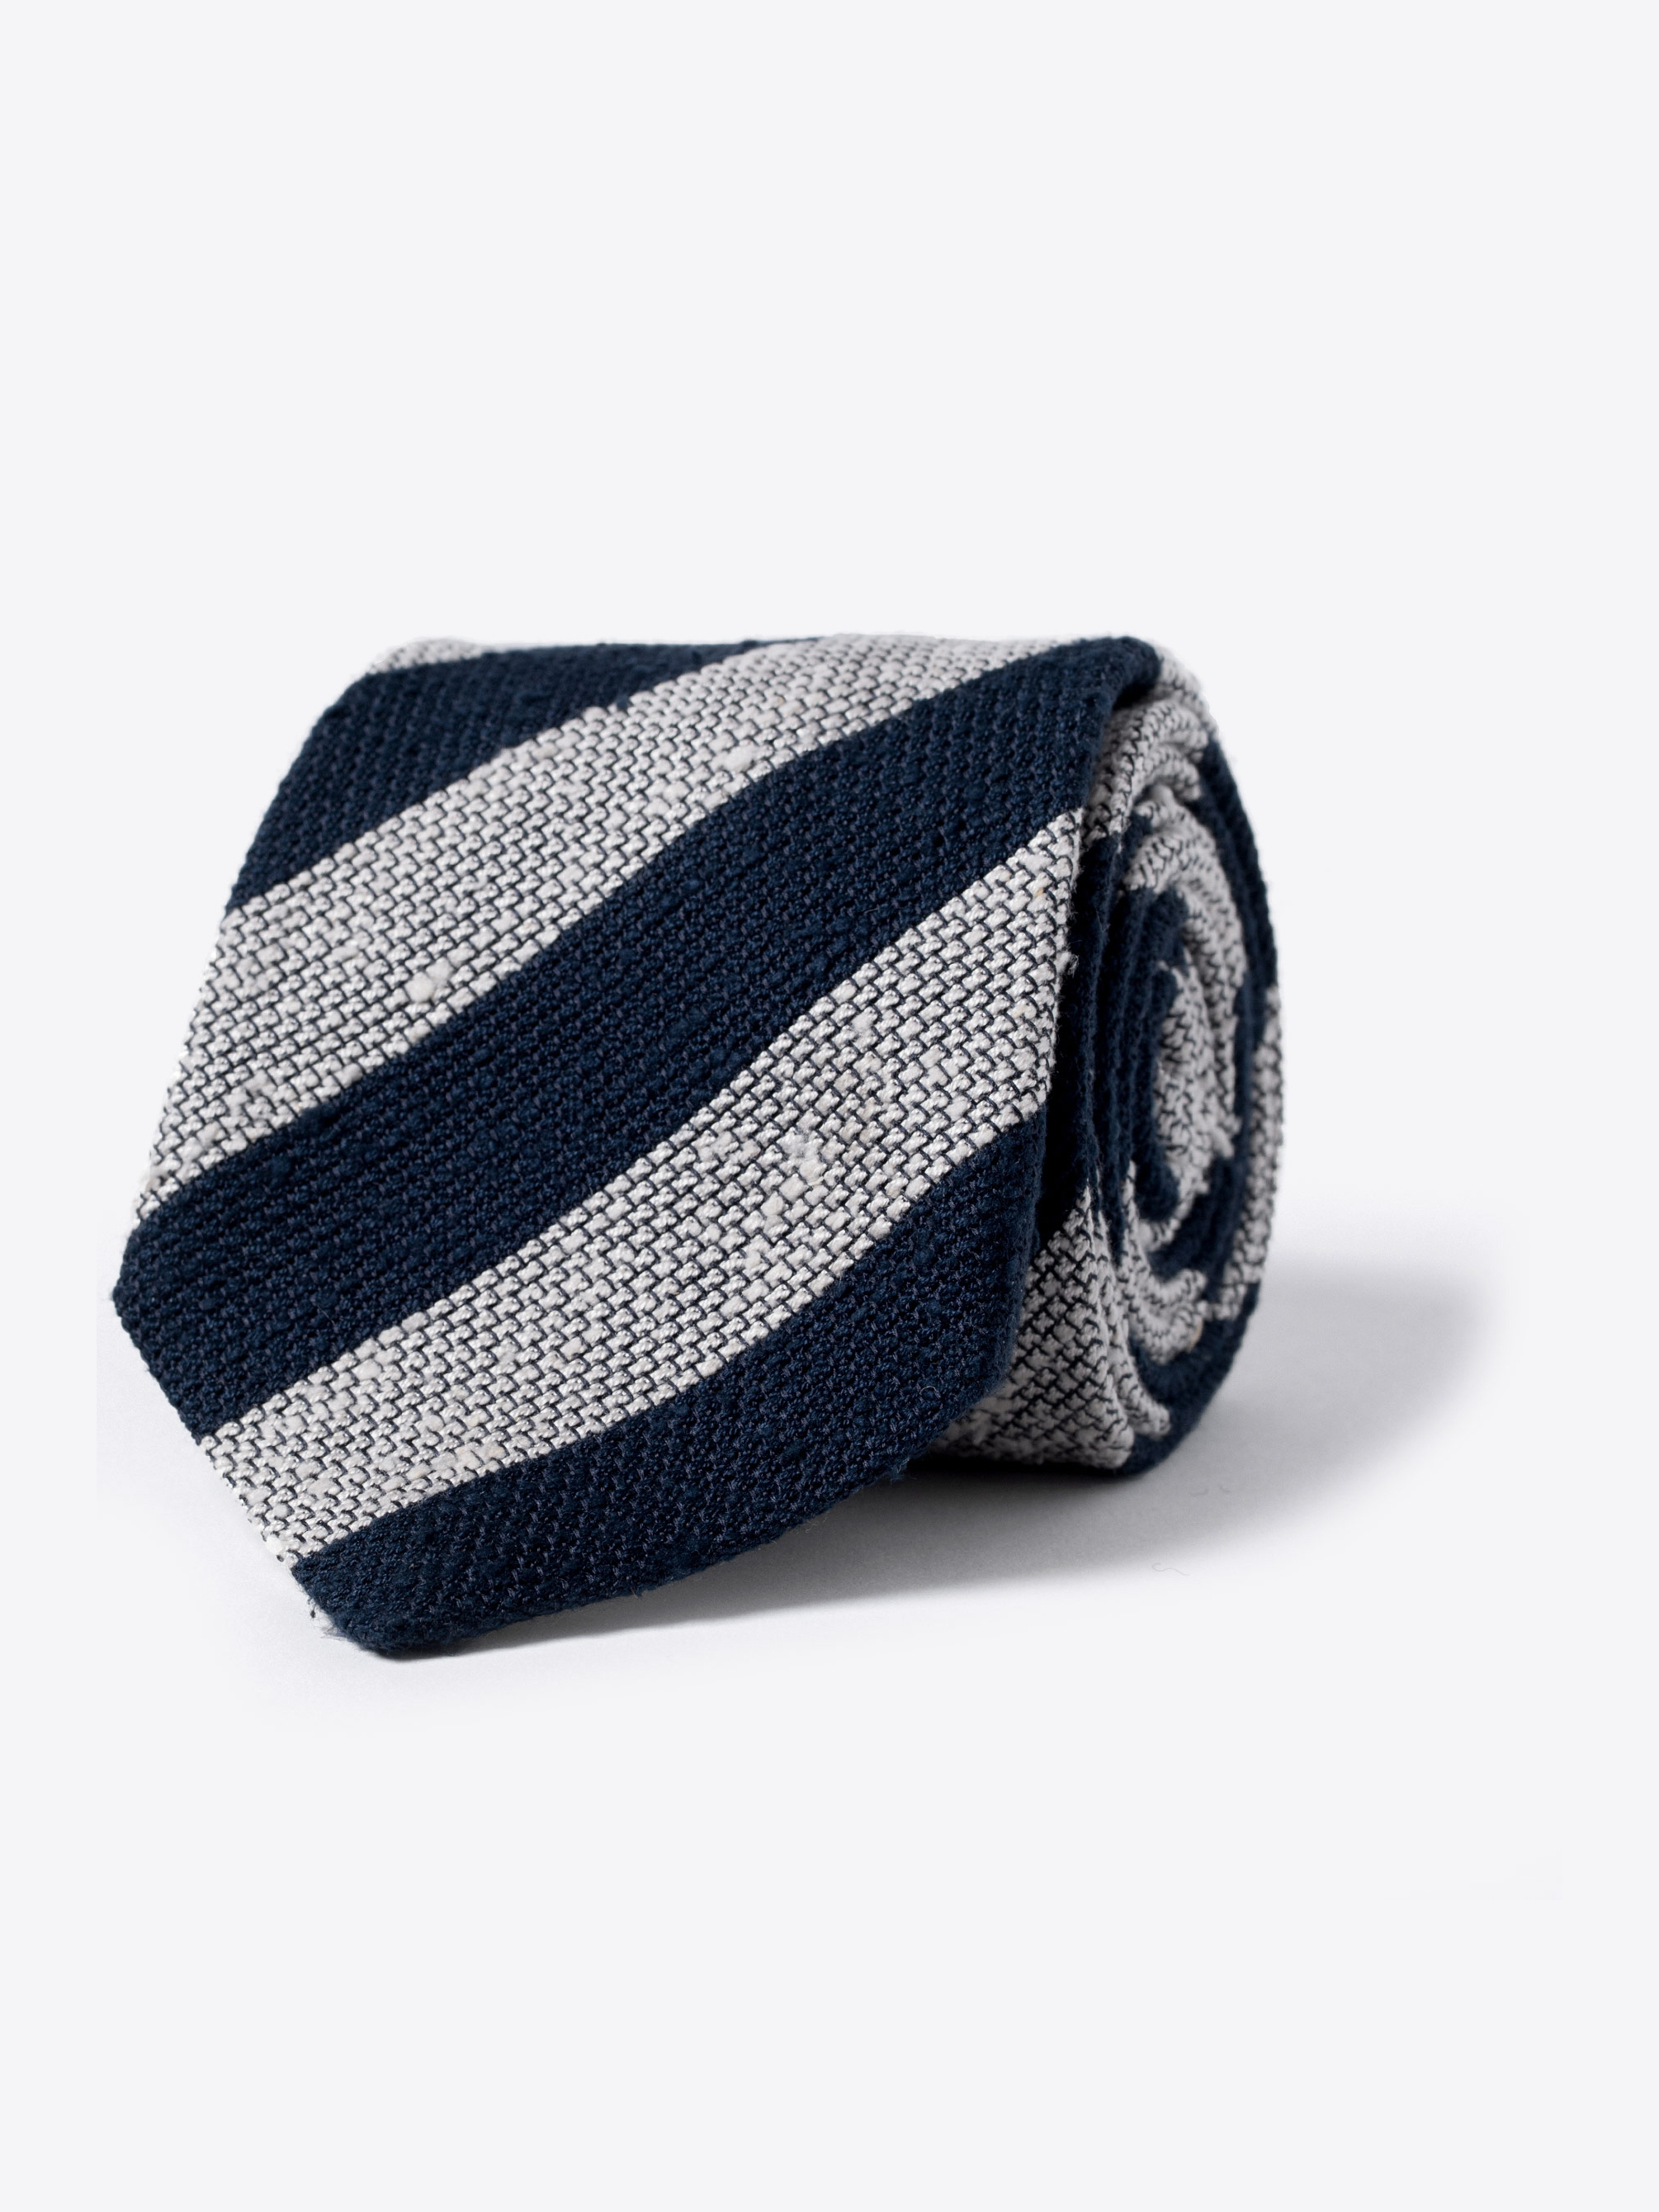 Zoom Image of Navy and Cream Stripe Shantung Grenadine Tie